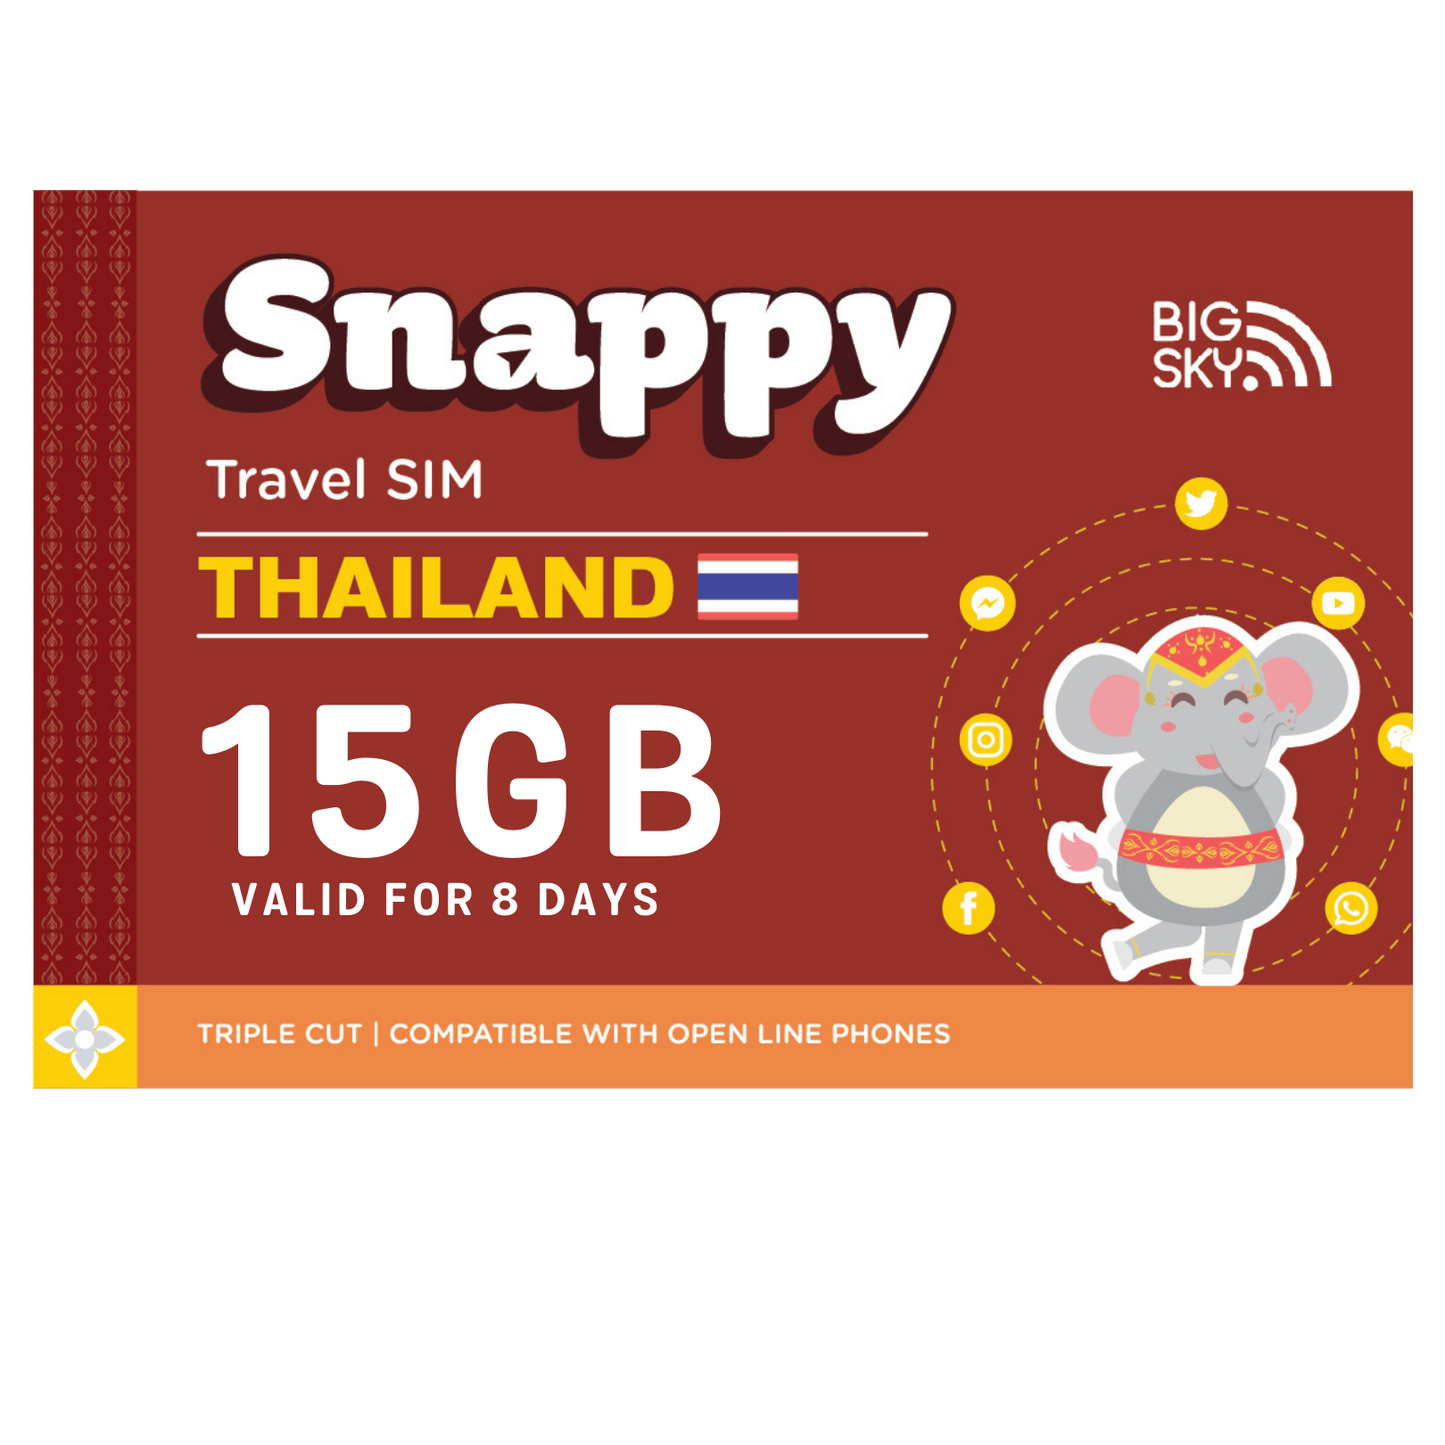 15GB THAILAND TRAVEL SIM (Snappy Travel SIM Powered by TrueMove)